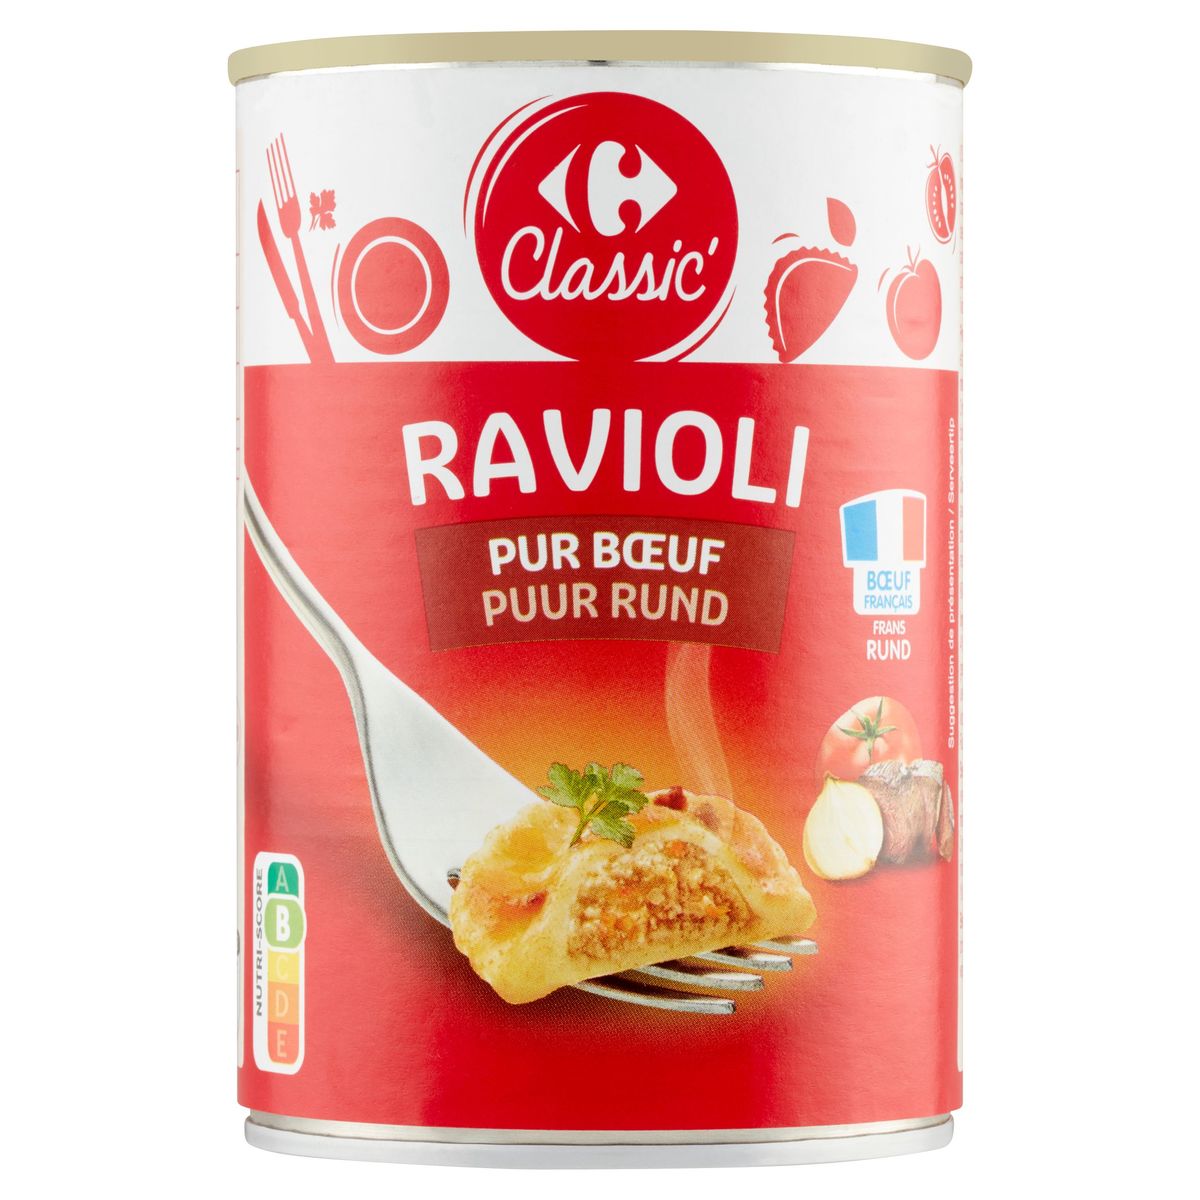 Grand ravioli pur bœuf en Bocal Danival - 1 kg : Conserves bio